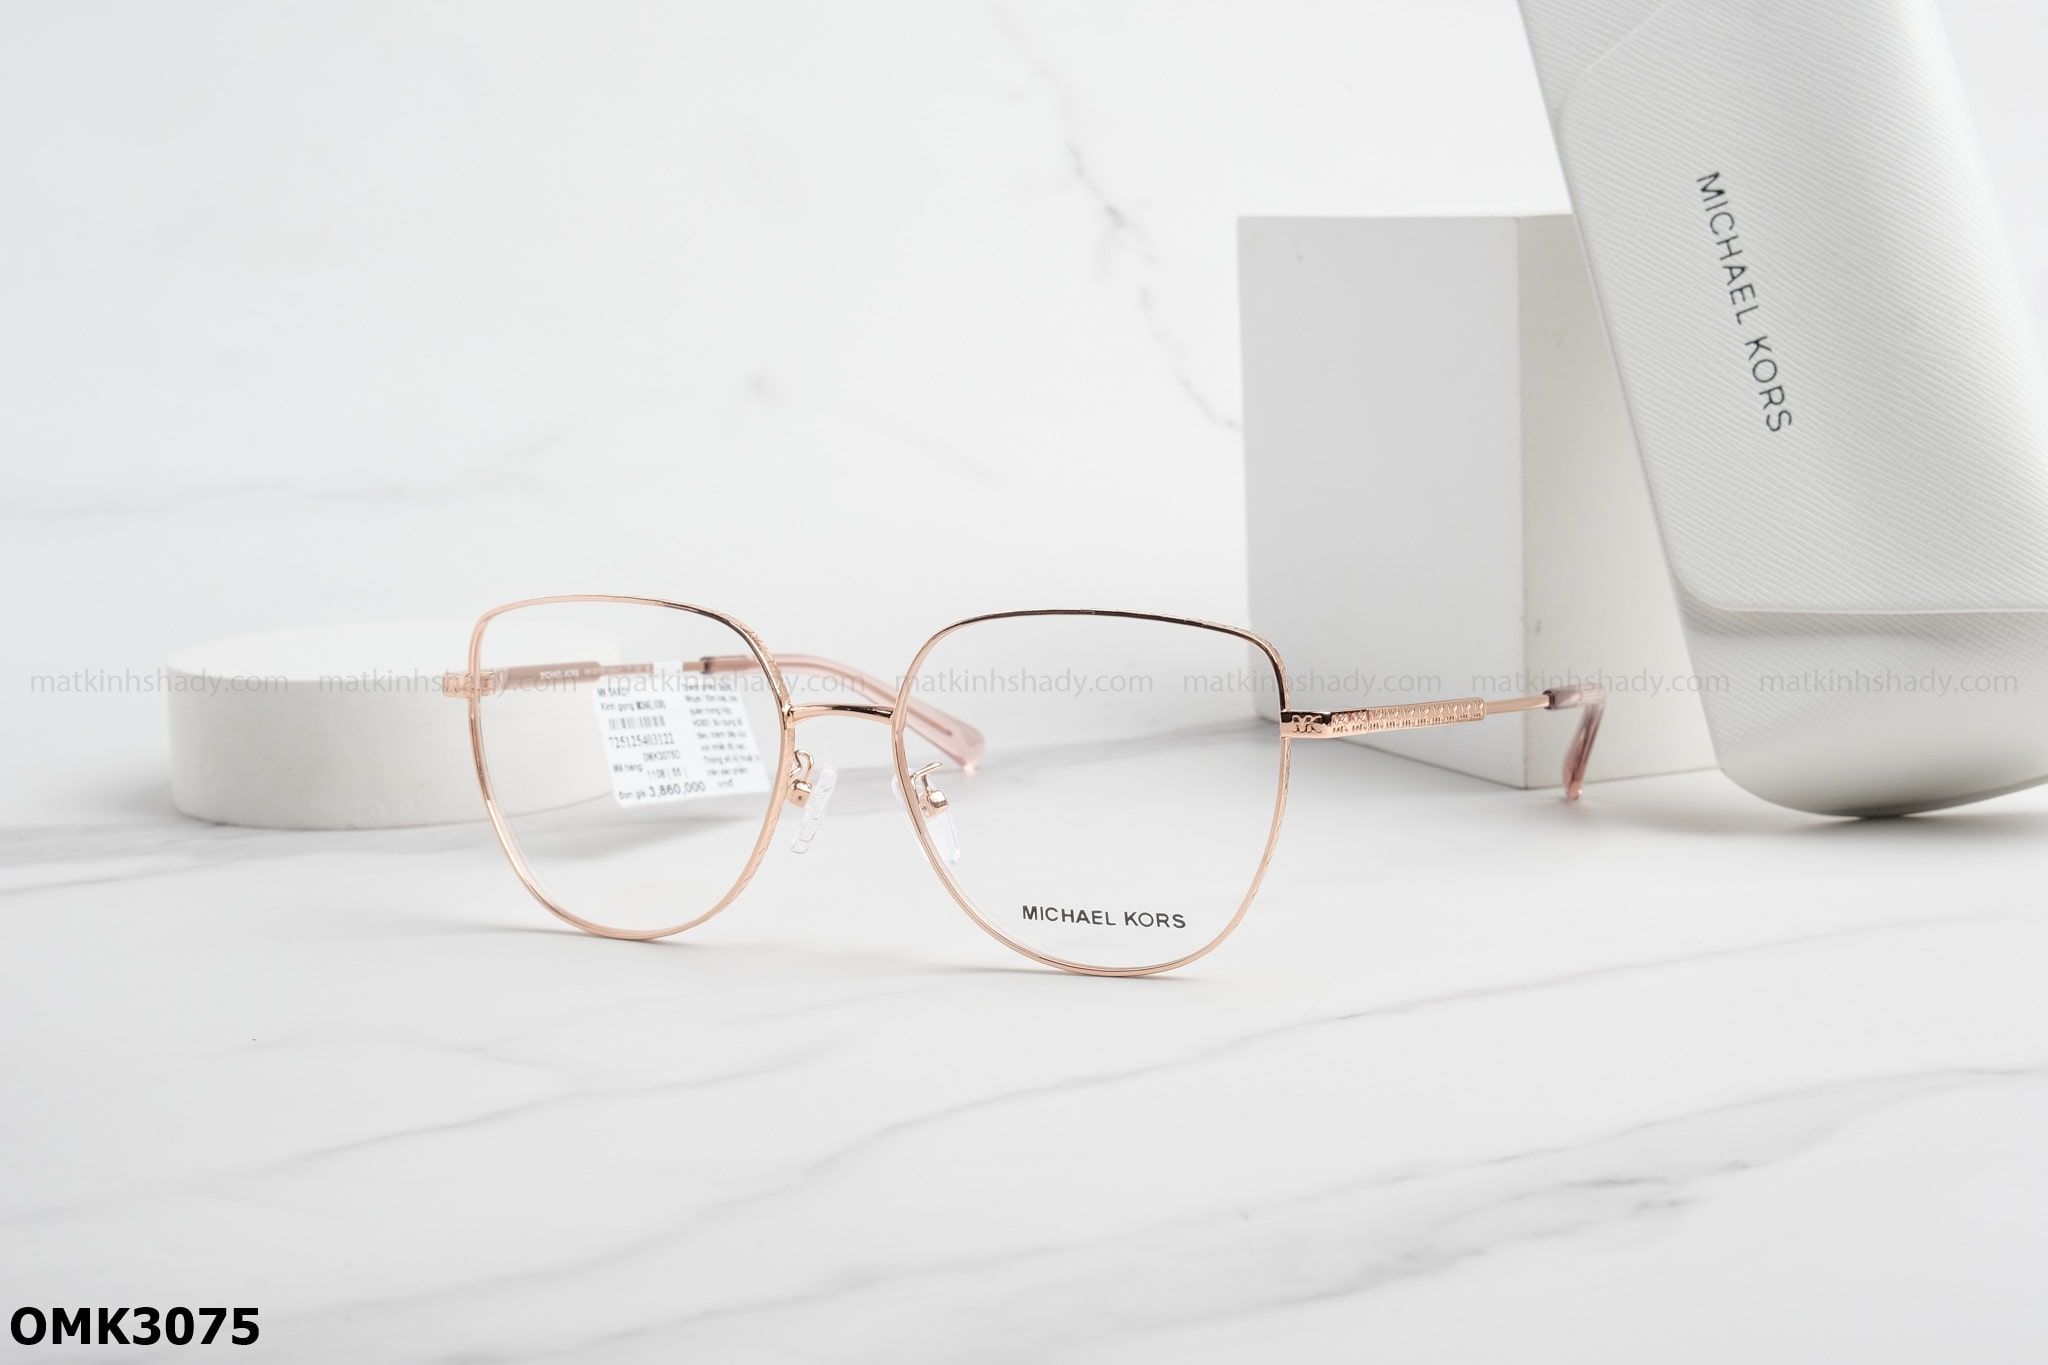  Michael Kors Eyewear - Glasses - OMK3075 